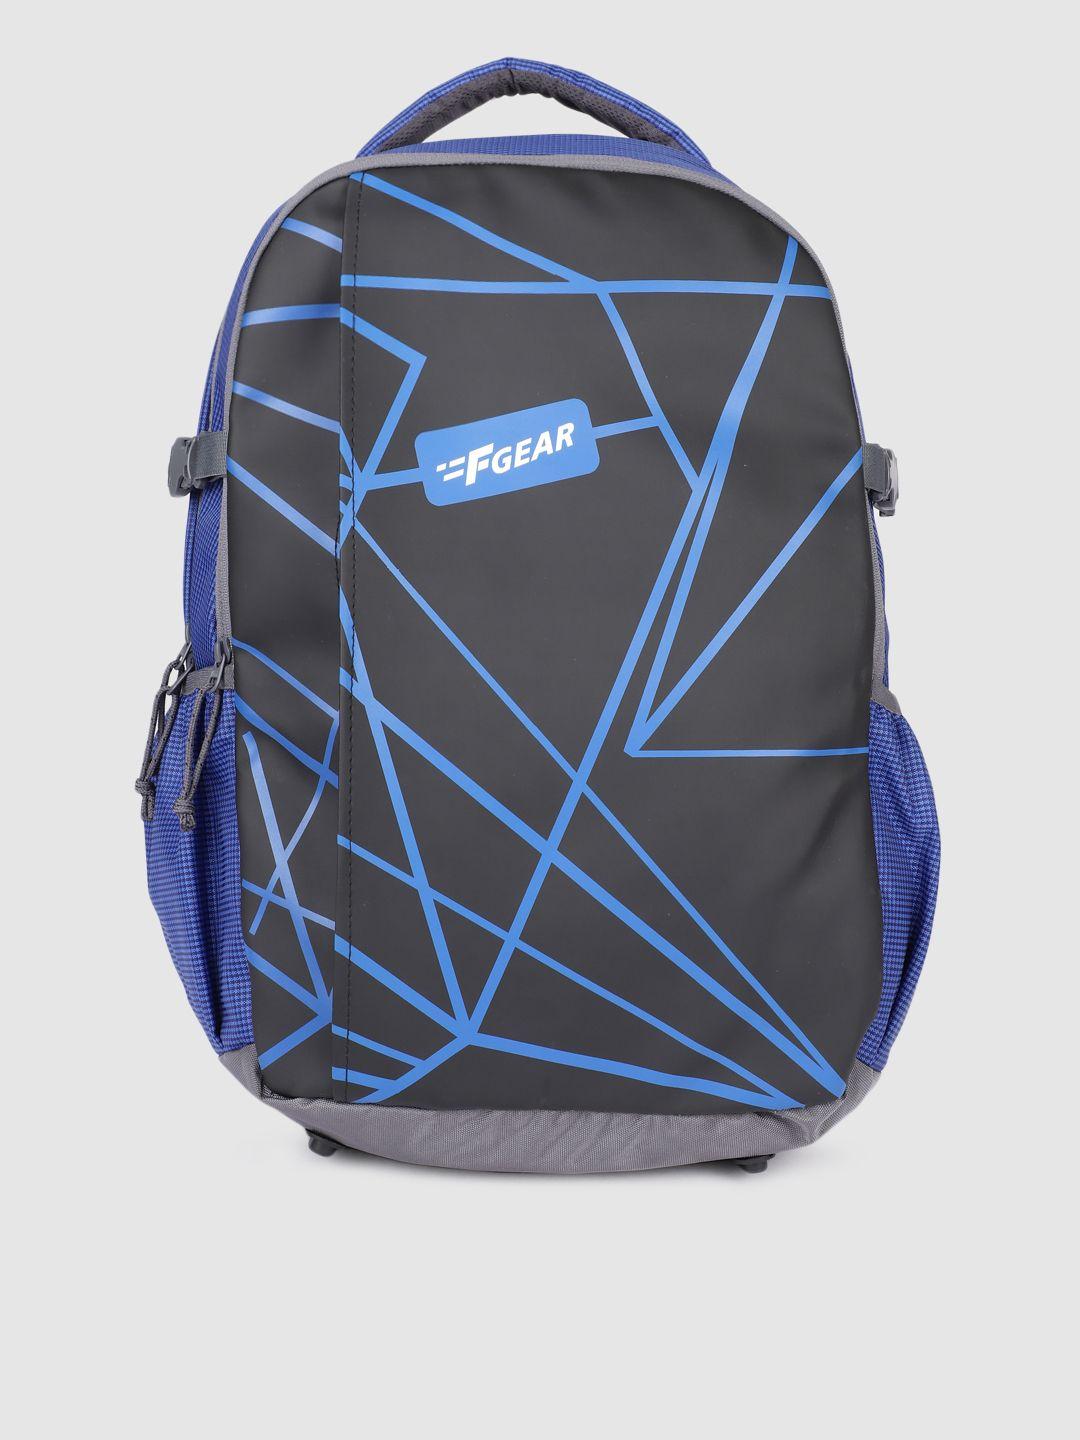 f gear unisex charcoal black & navy blue geometric talent backpack